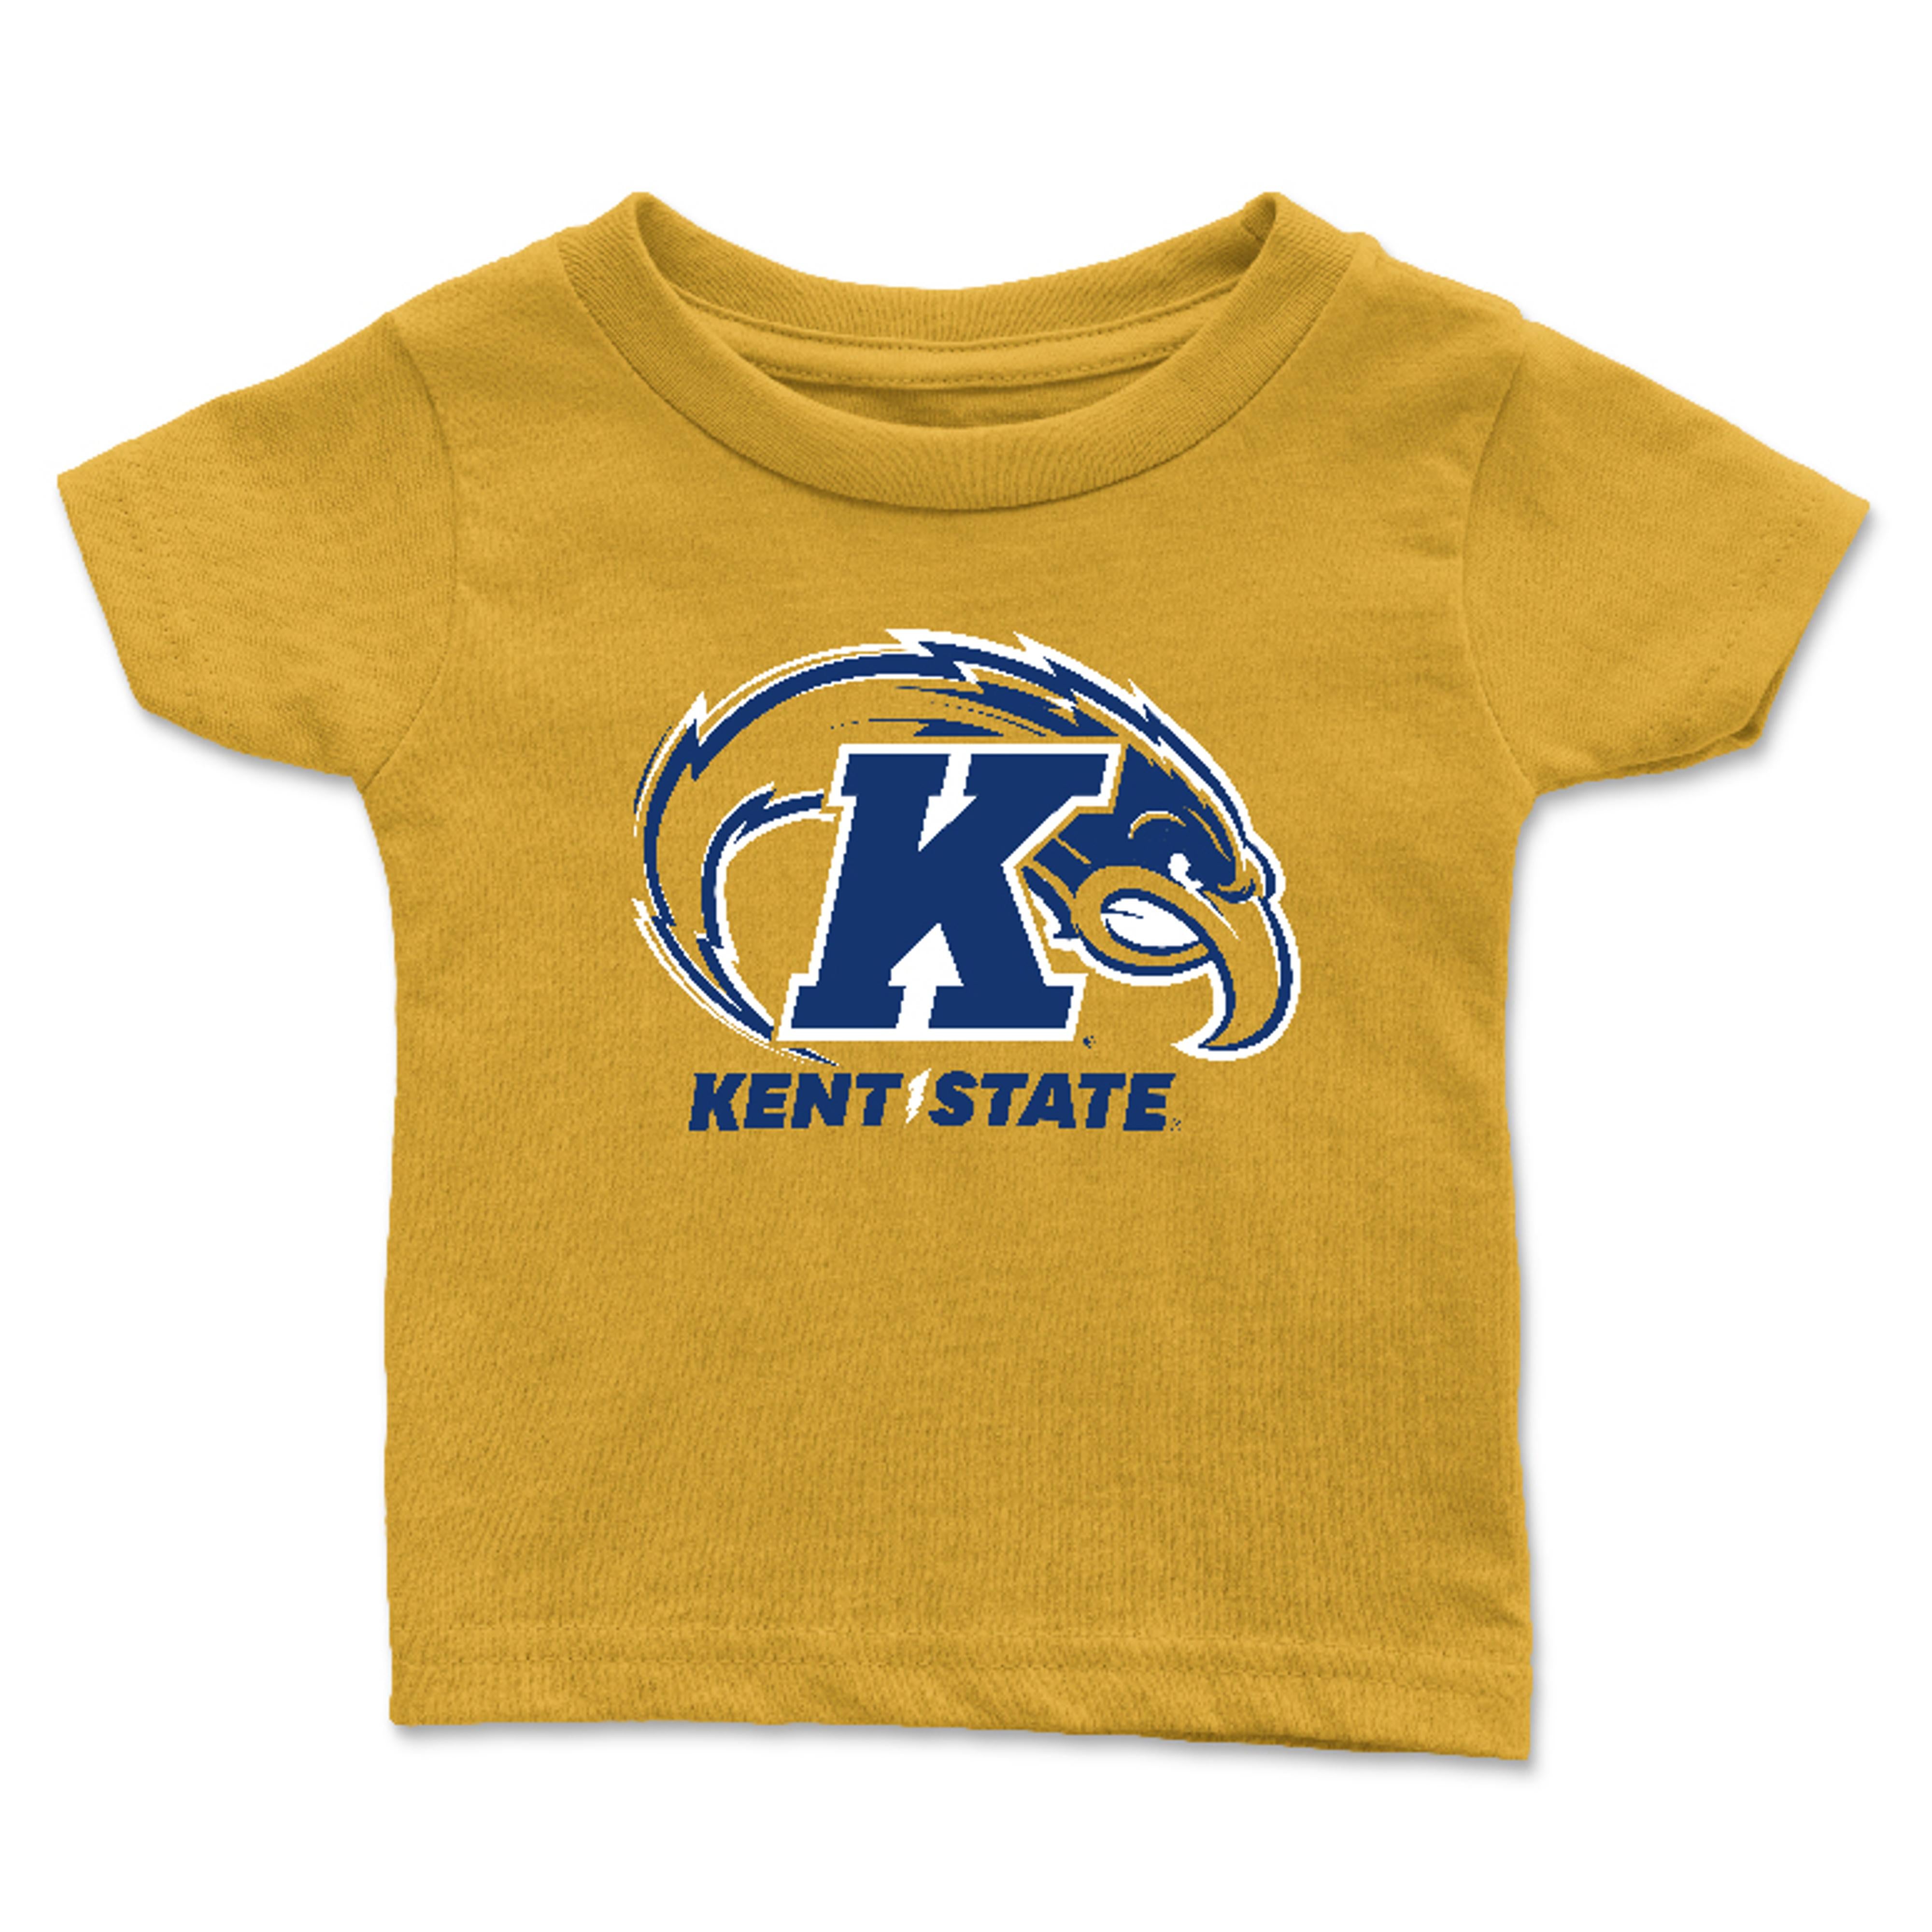 Kent State Gold Infant T-Shirt